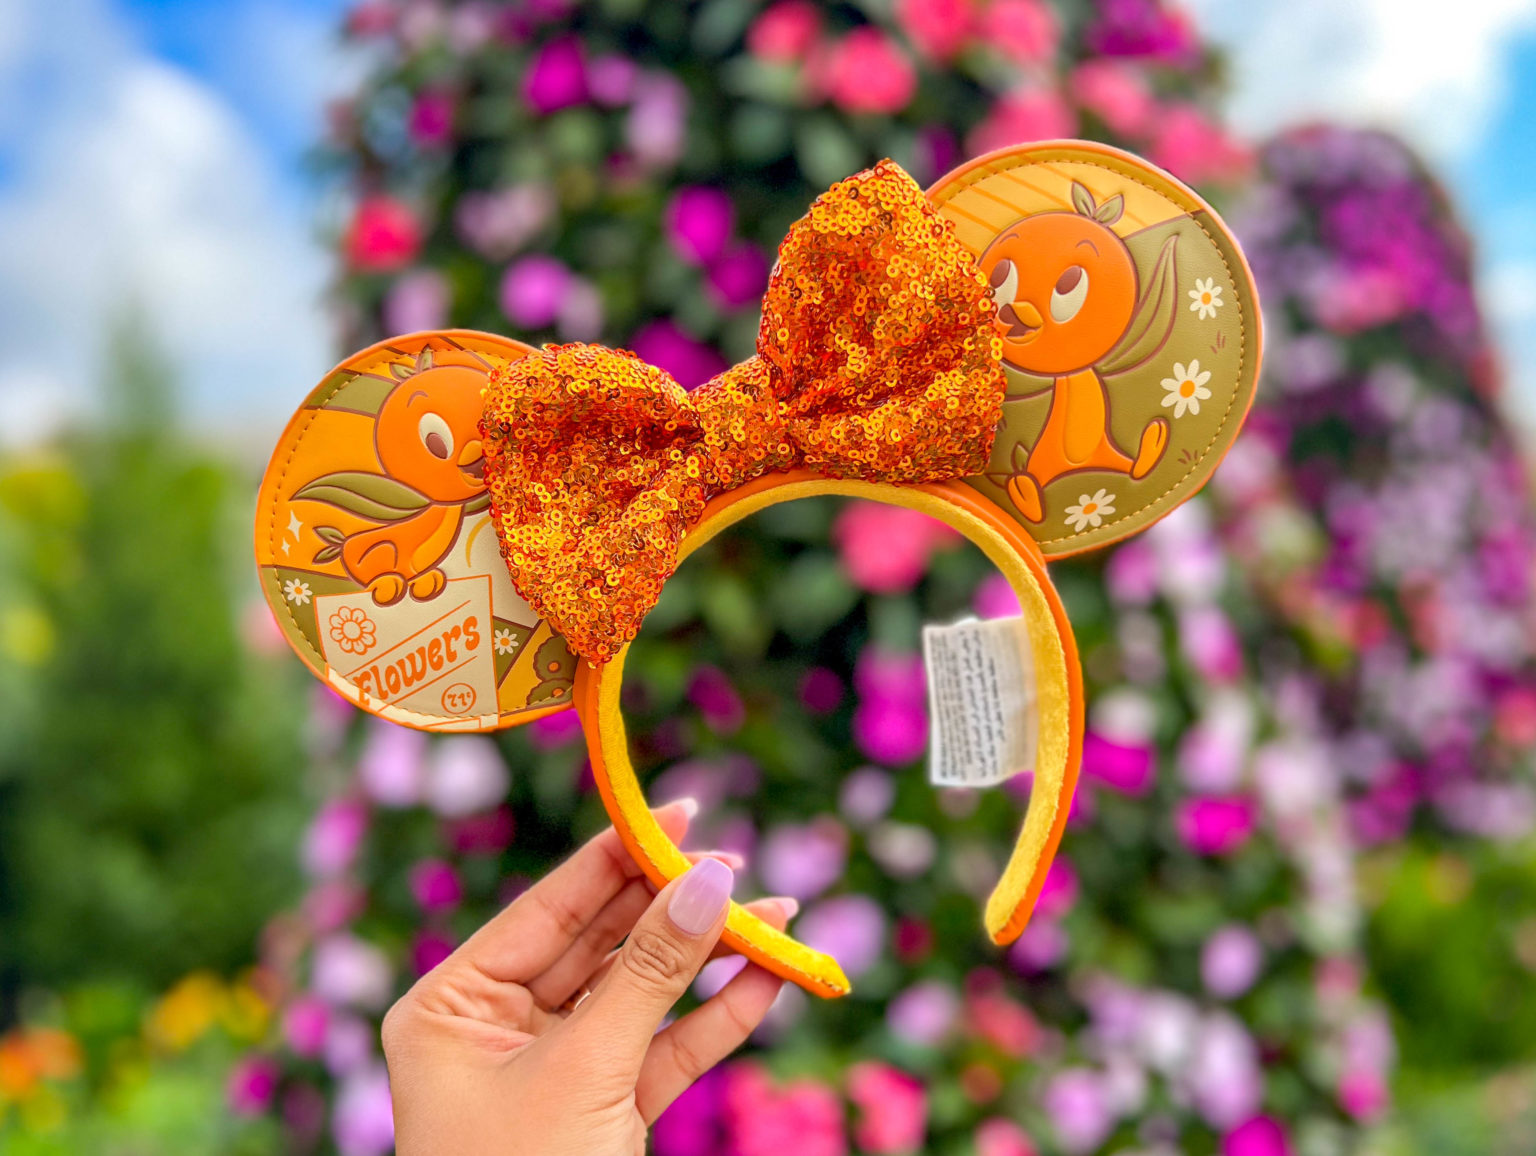 PHOTOS New Orange Bird Ears Have Arrived in Disney World!